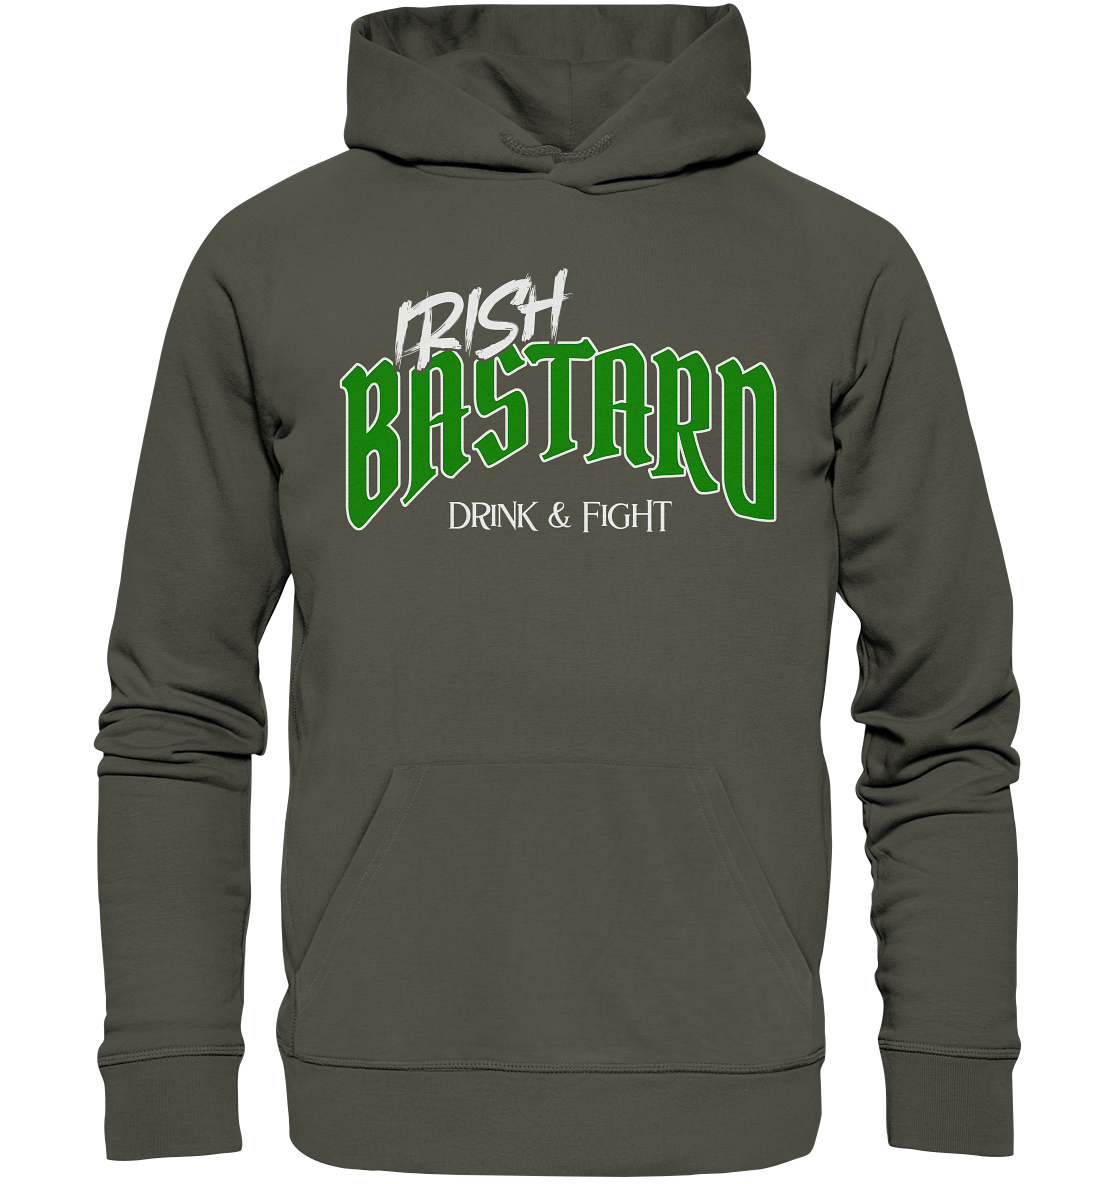 Irish Bastard "Drink & Fight" - Organic Hoodie